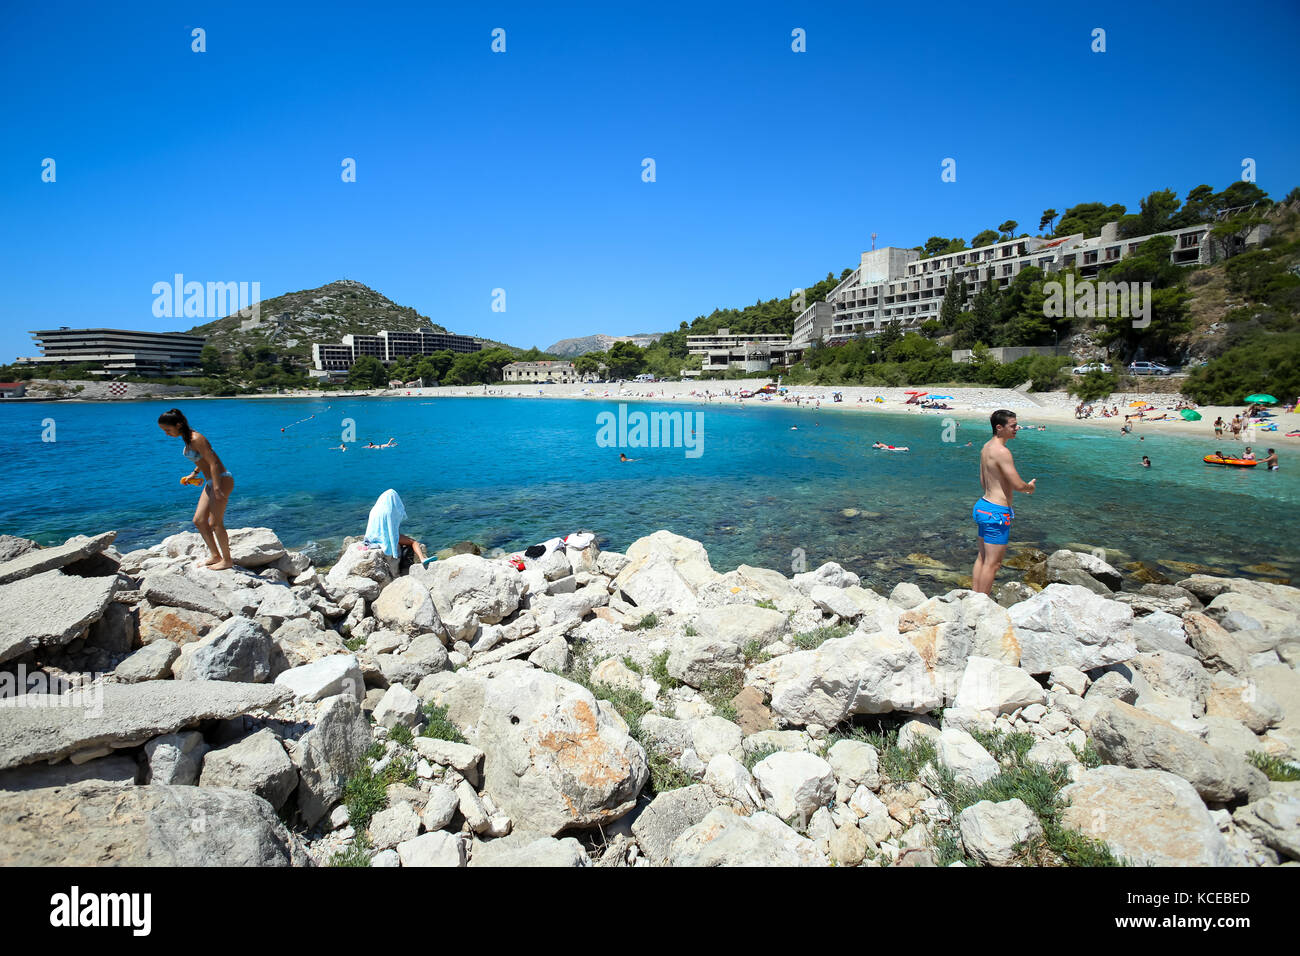 KUPARI, CROATIA - JULY 18, 2017 : People swimming and sunbathing on a rocky sea beach in Kupari, Croatia. Stock Photo